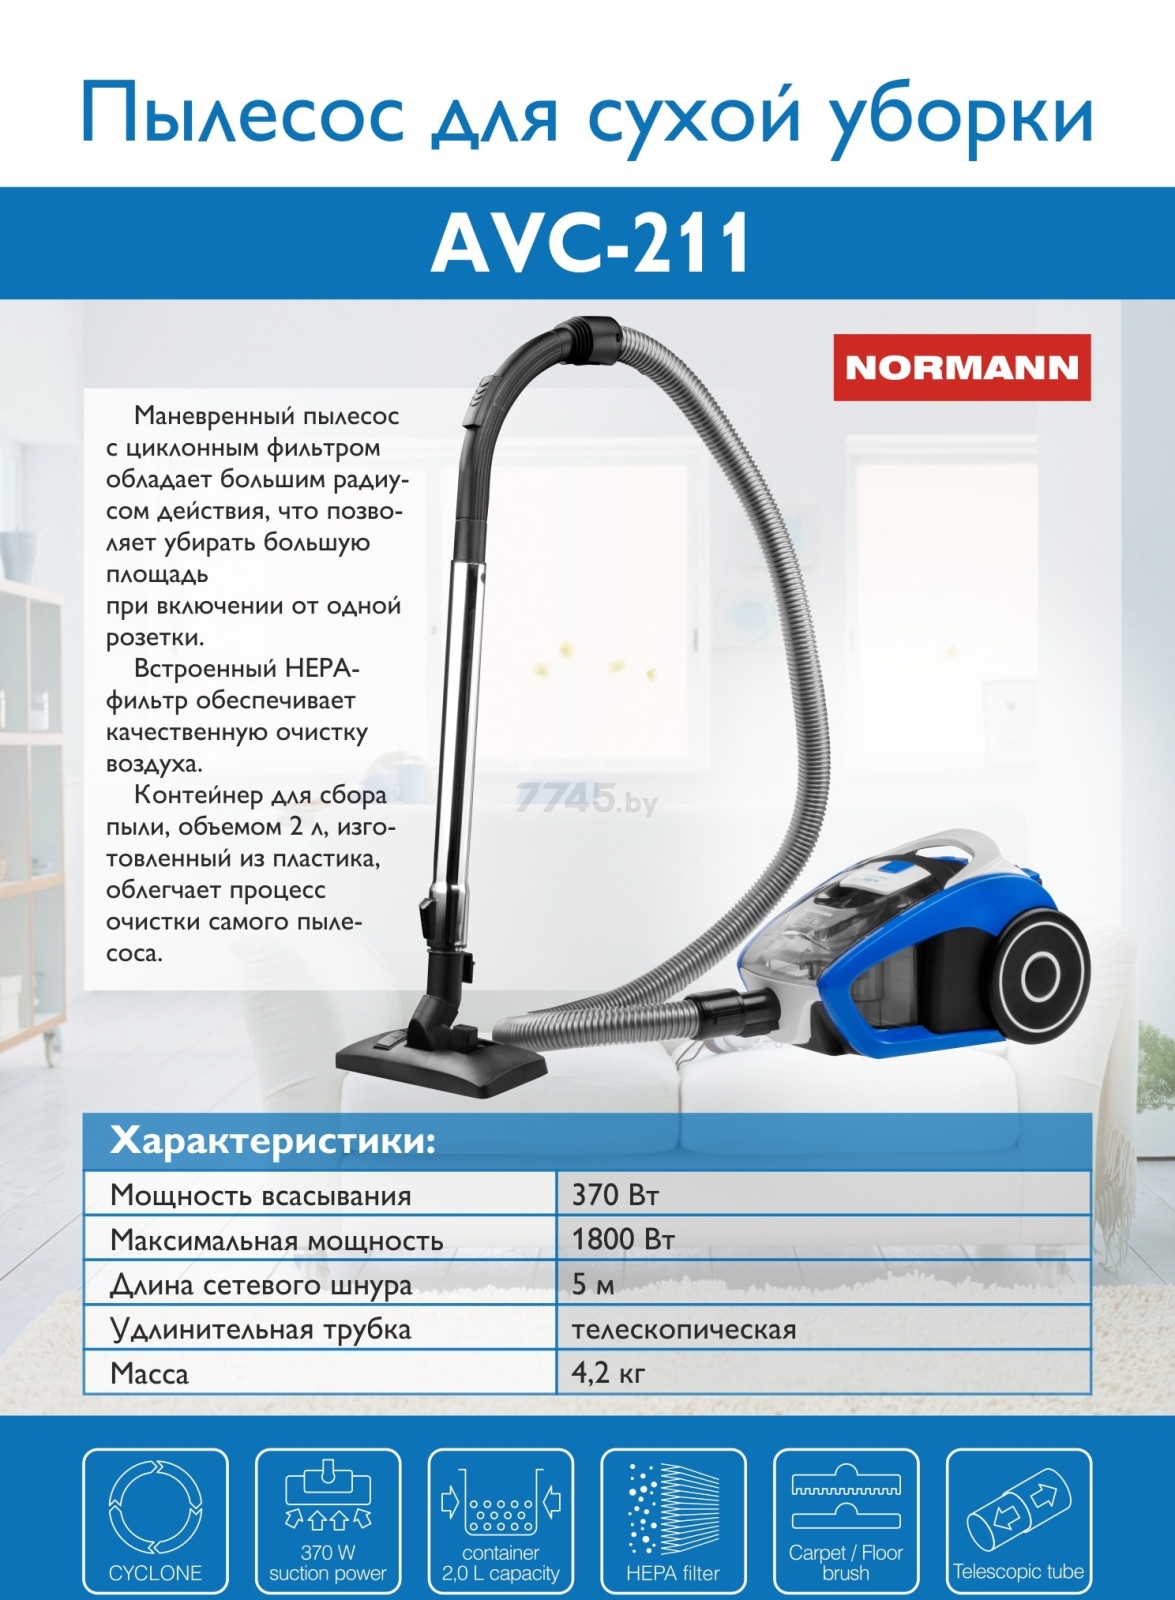 Пылесос NORMANN AVC-211  в Минске — цены в е 7745.by